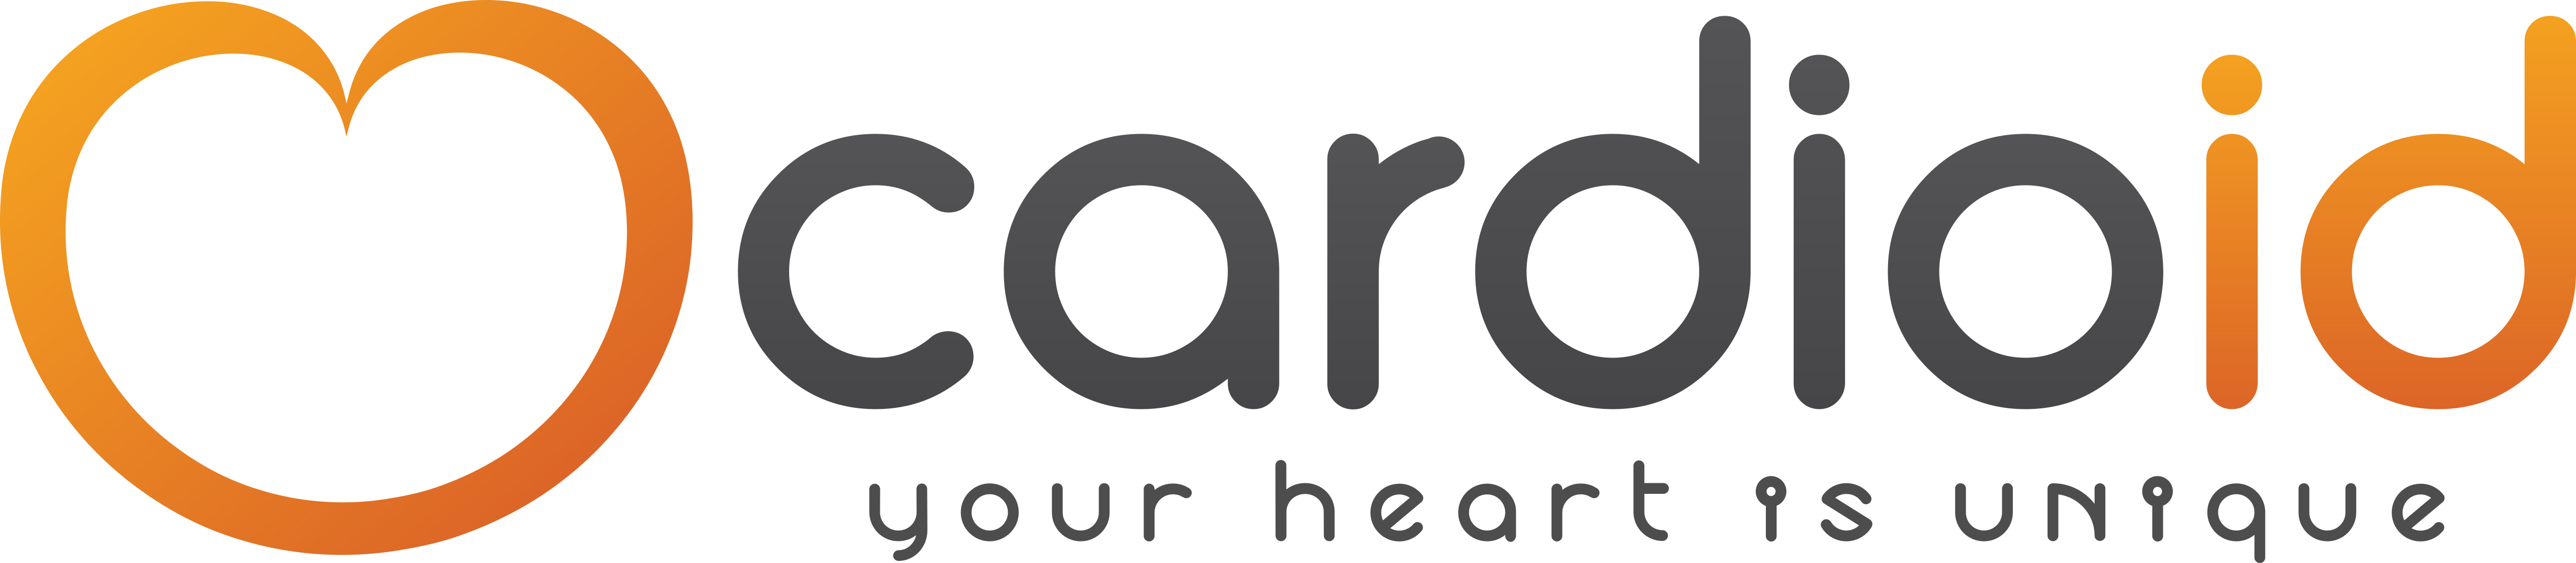 CardioID_logo_tagline